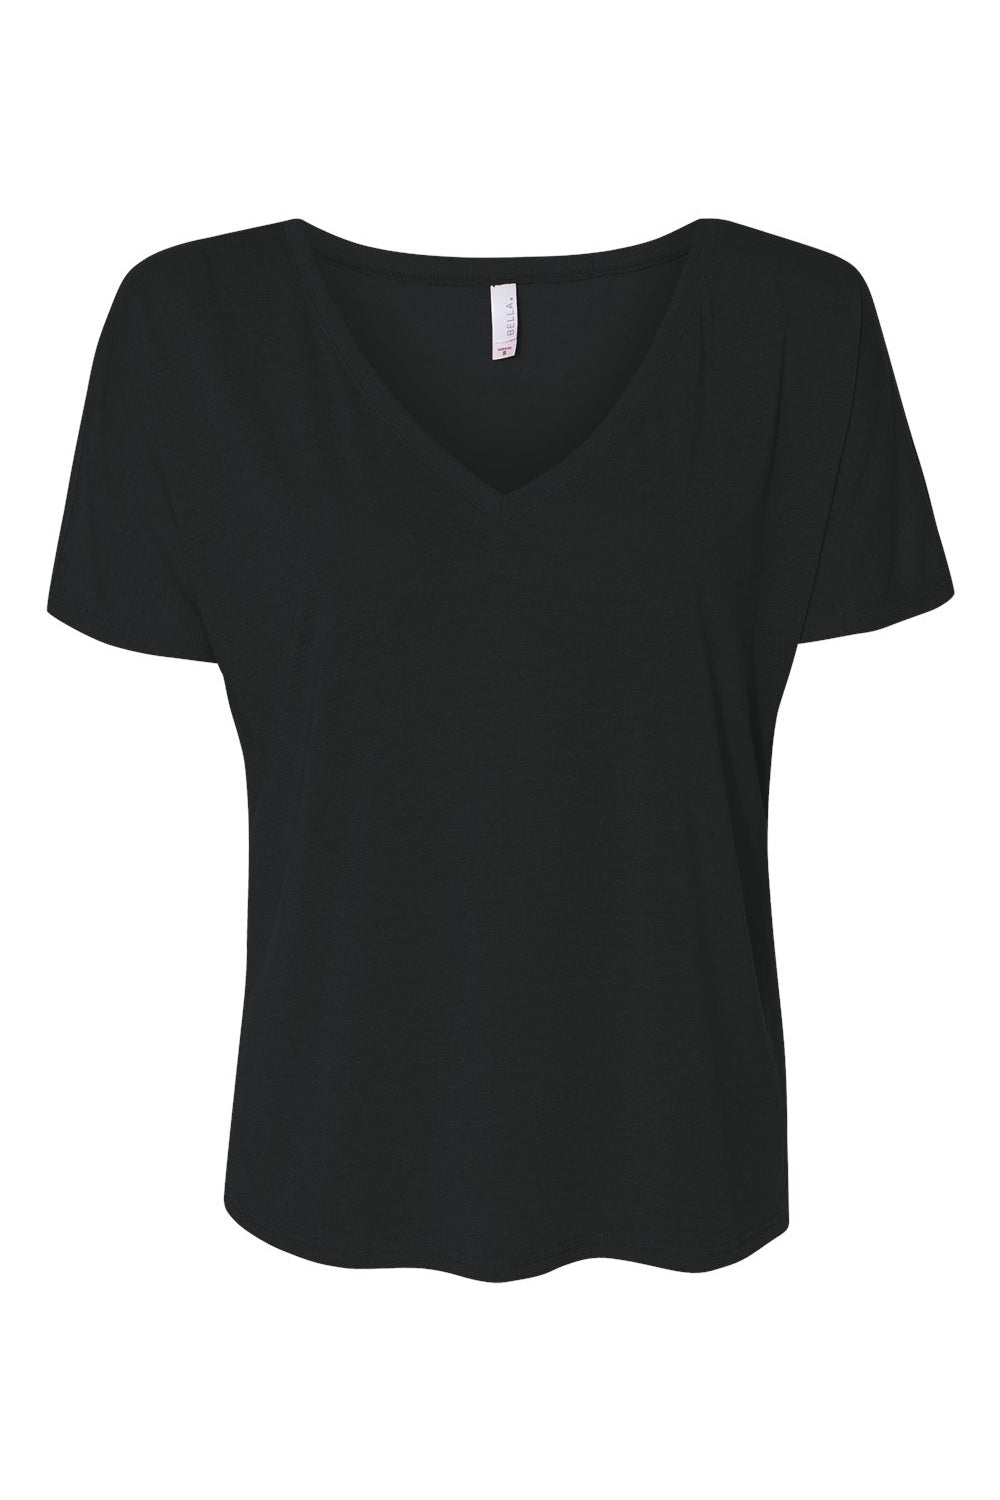 Bella + Canvas 8815 Womens Slouchy Short Sleeve V-Neck T-Shirt Black Flat Front